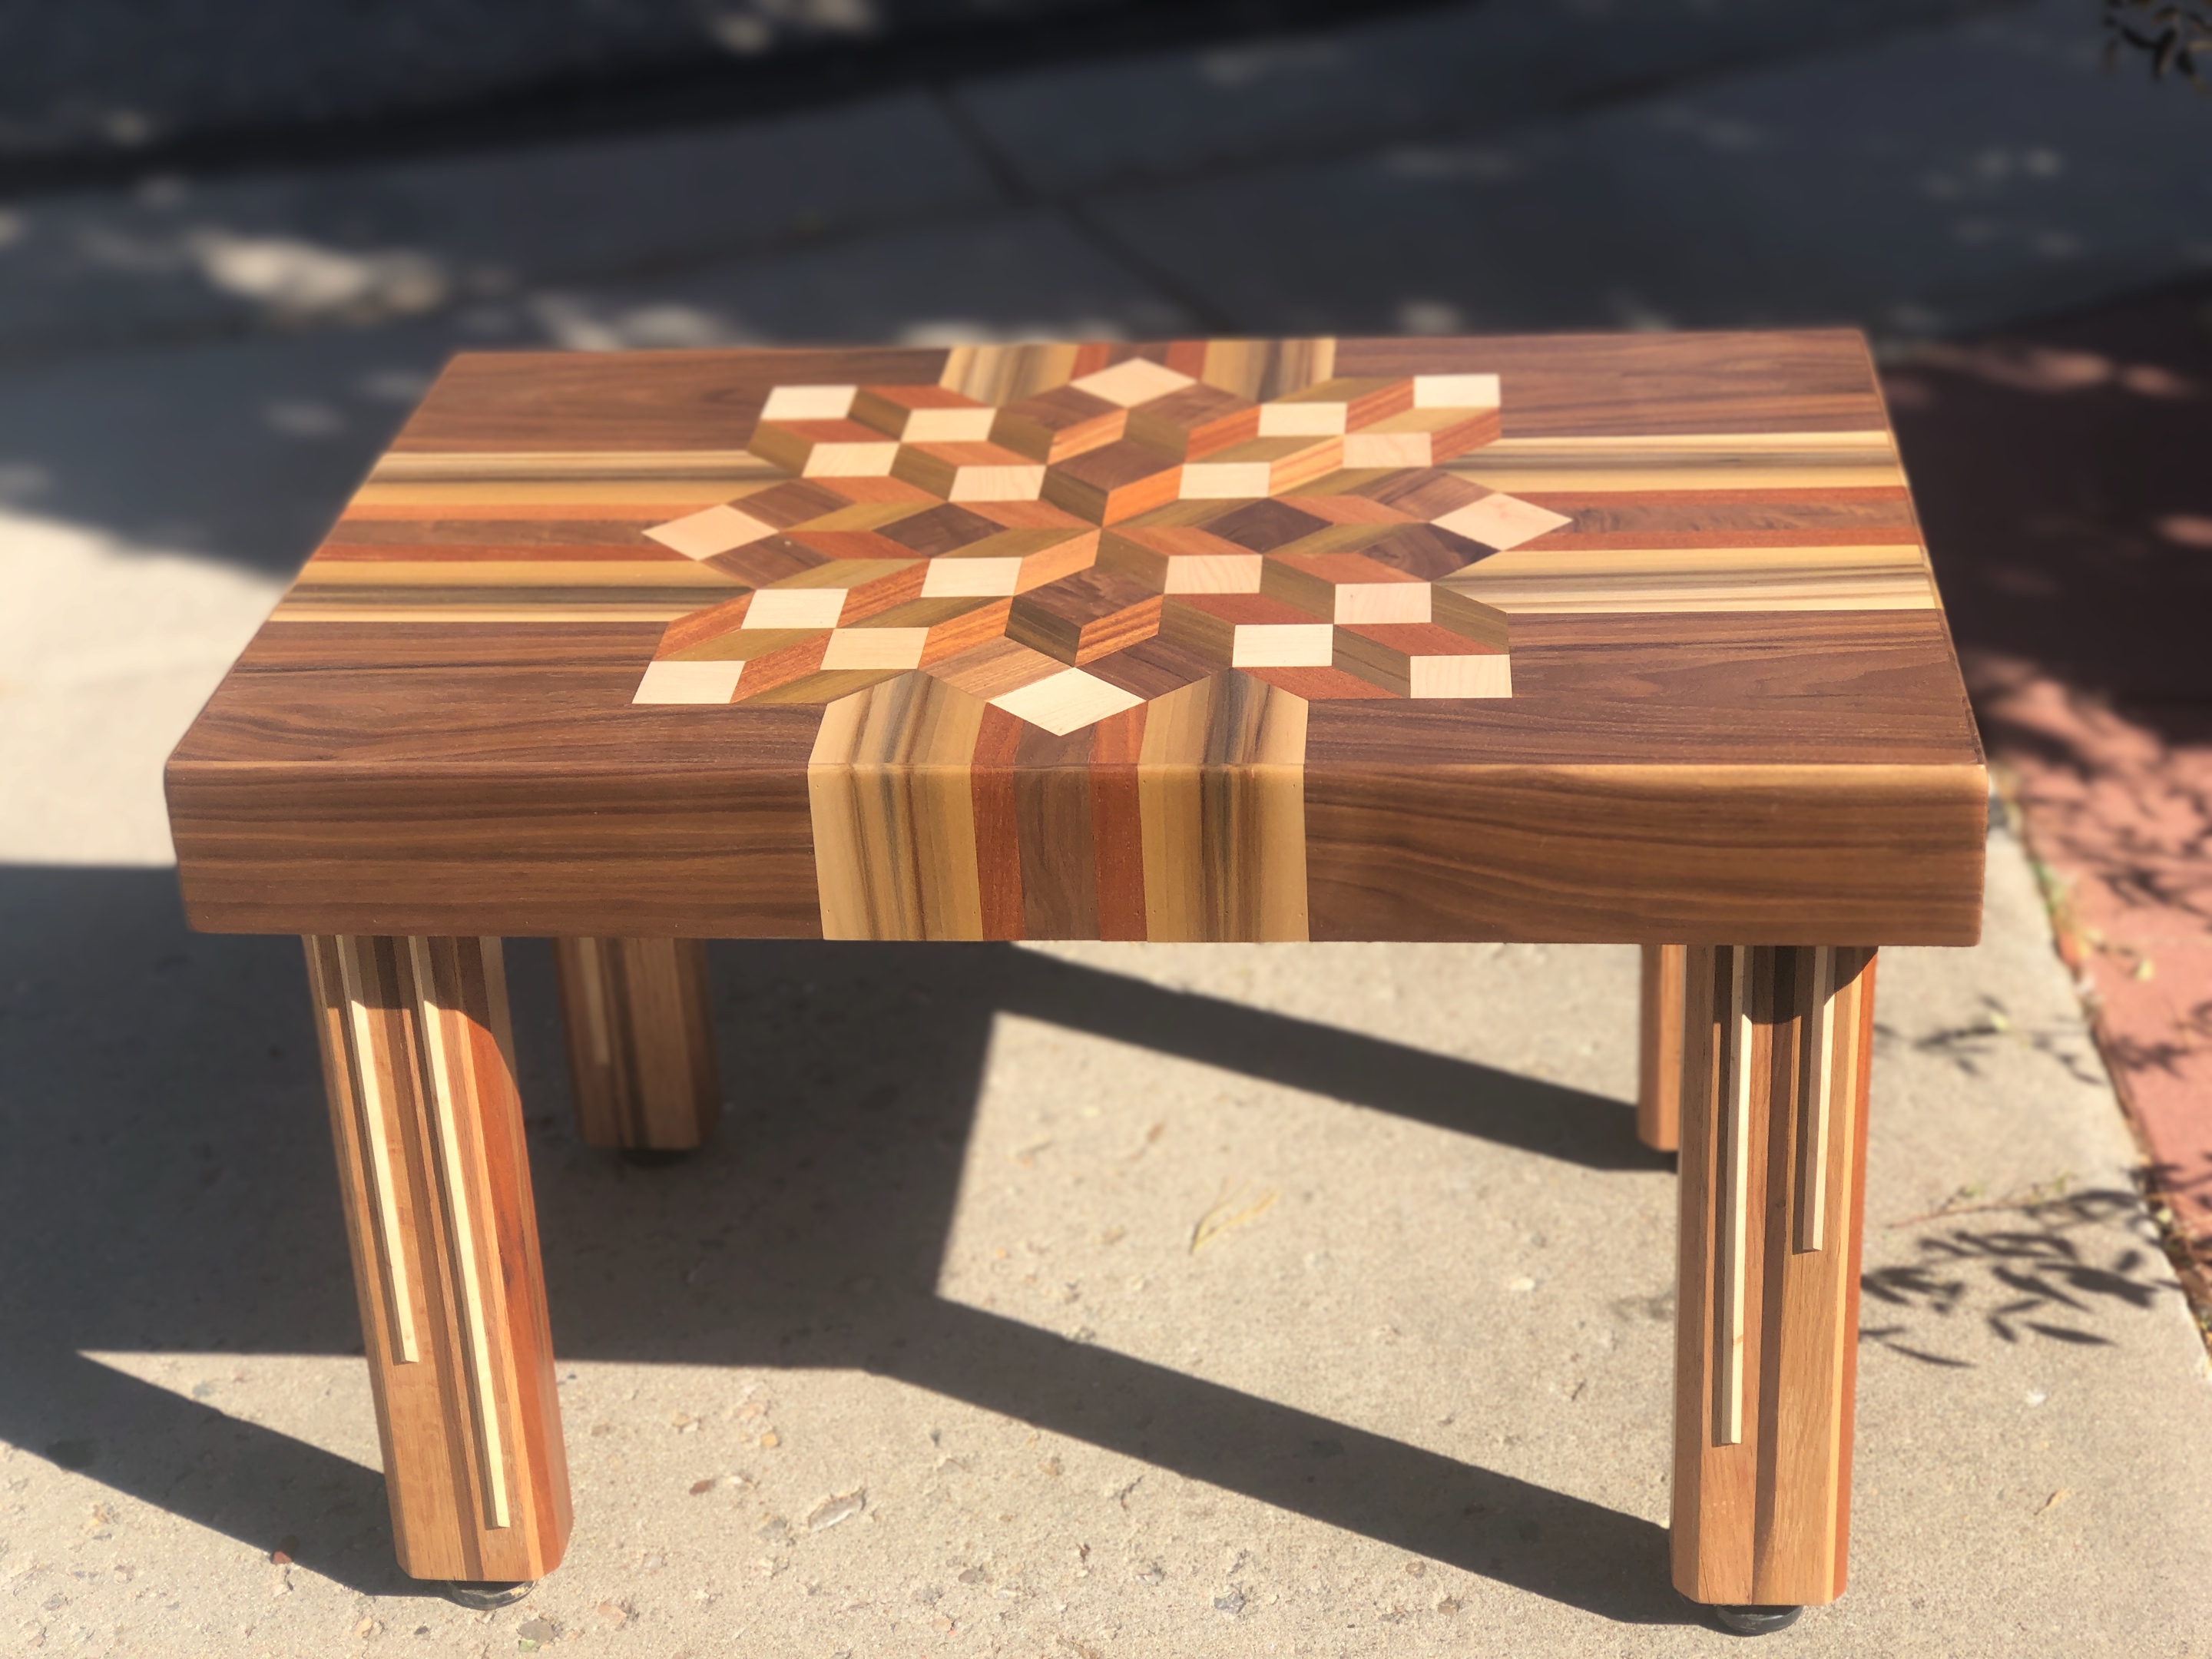 Qbert End Tables – $1,600